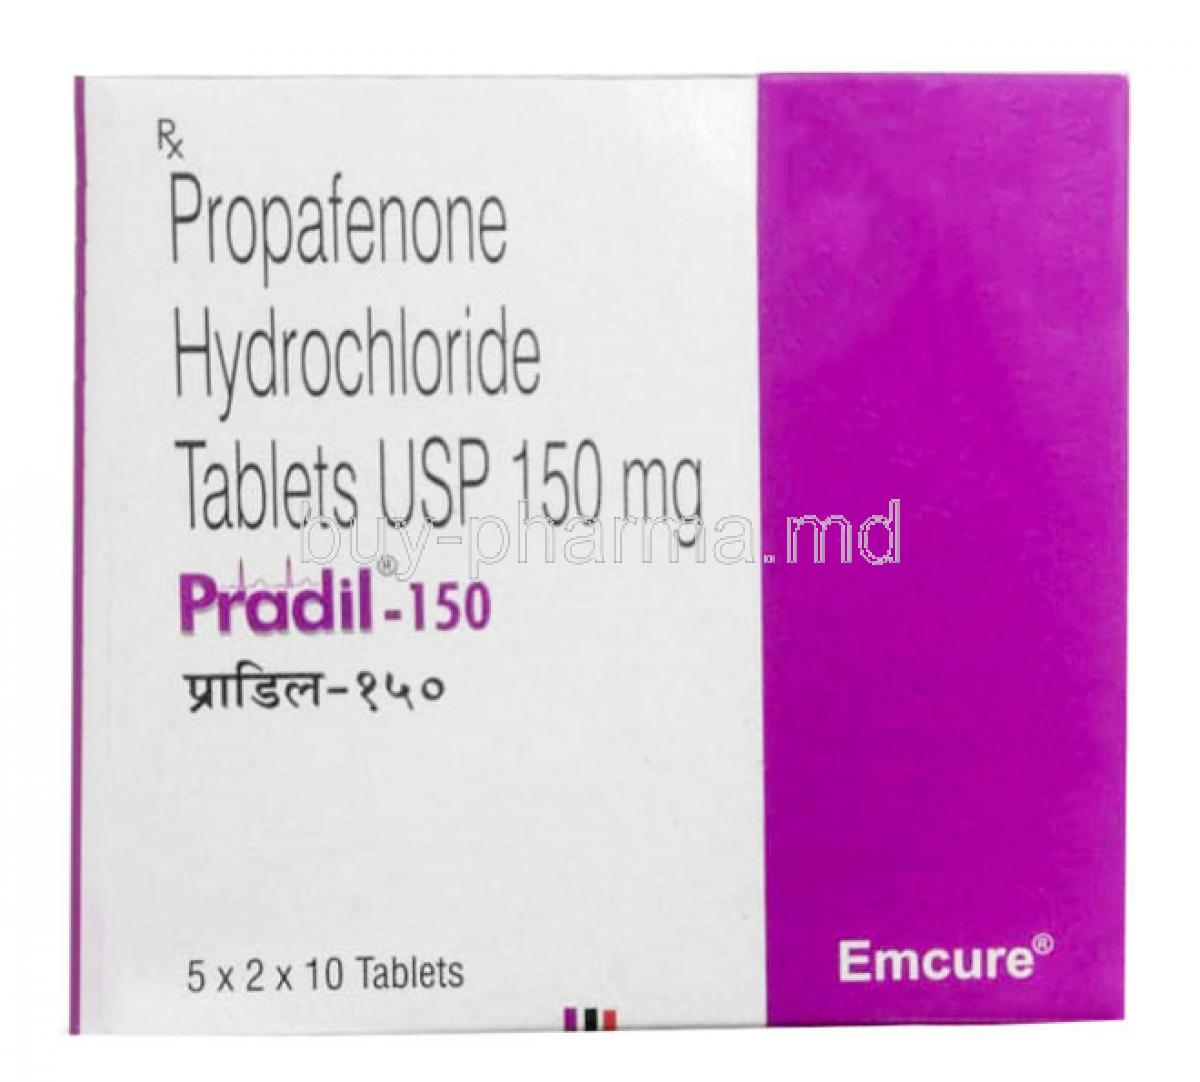 Pradil 150, Propafenone 150 mg, Emcure Pharma, Box front view